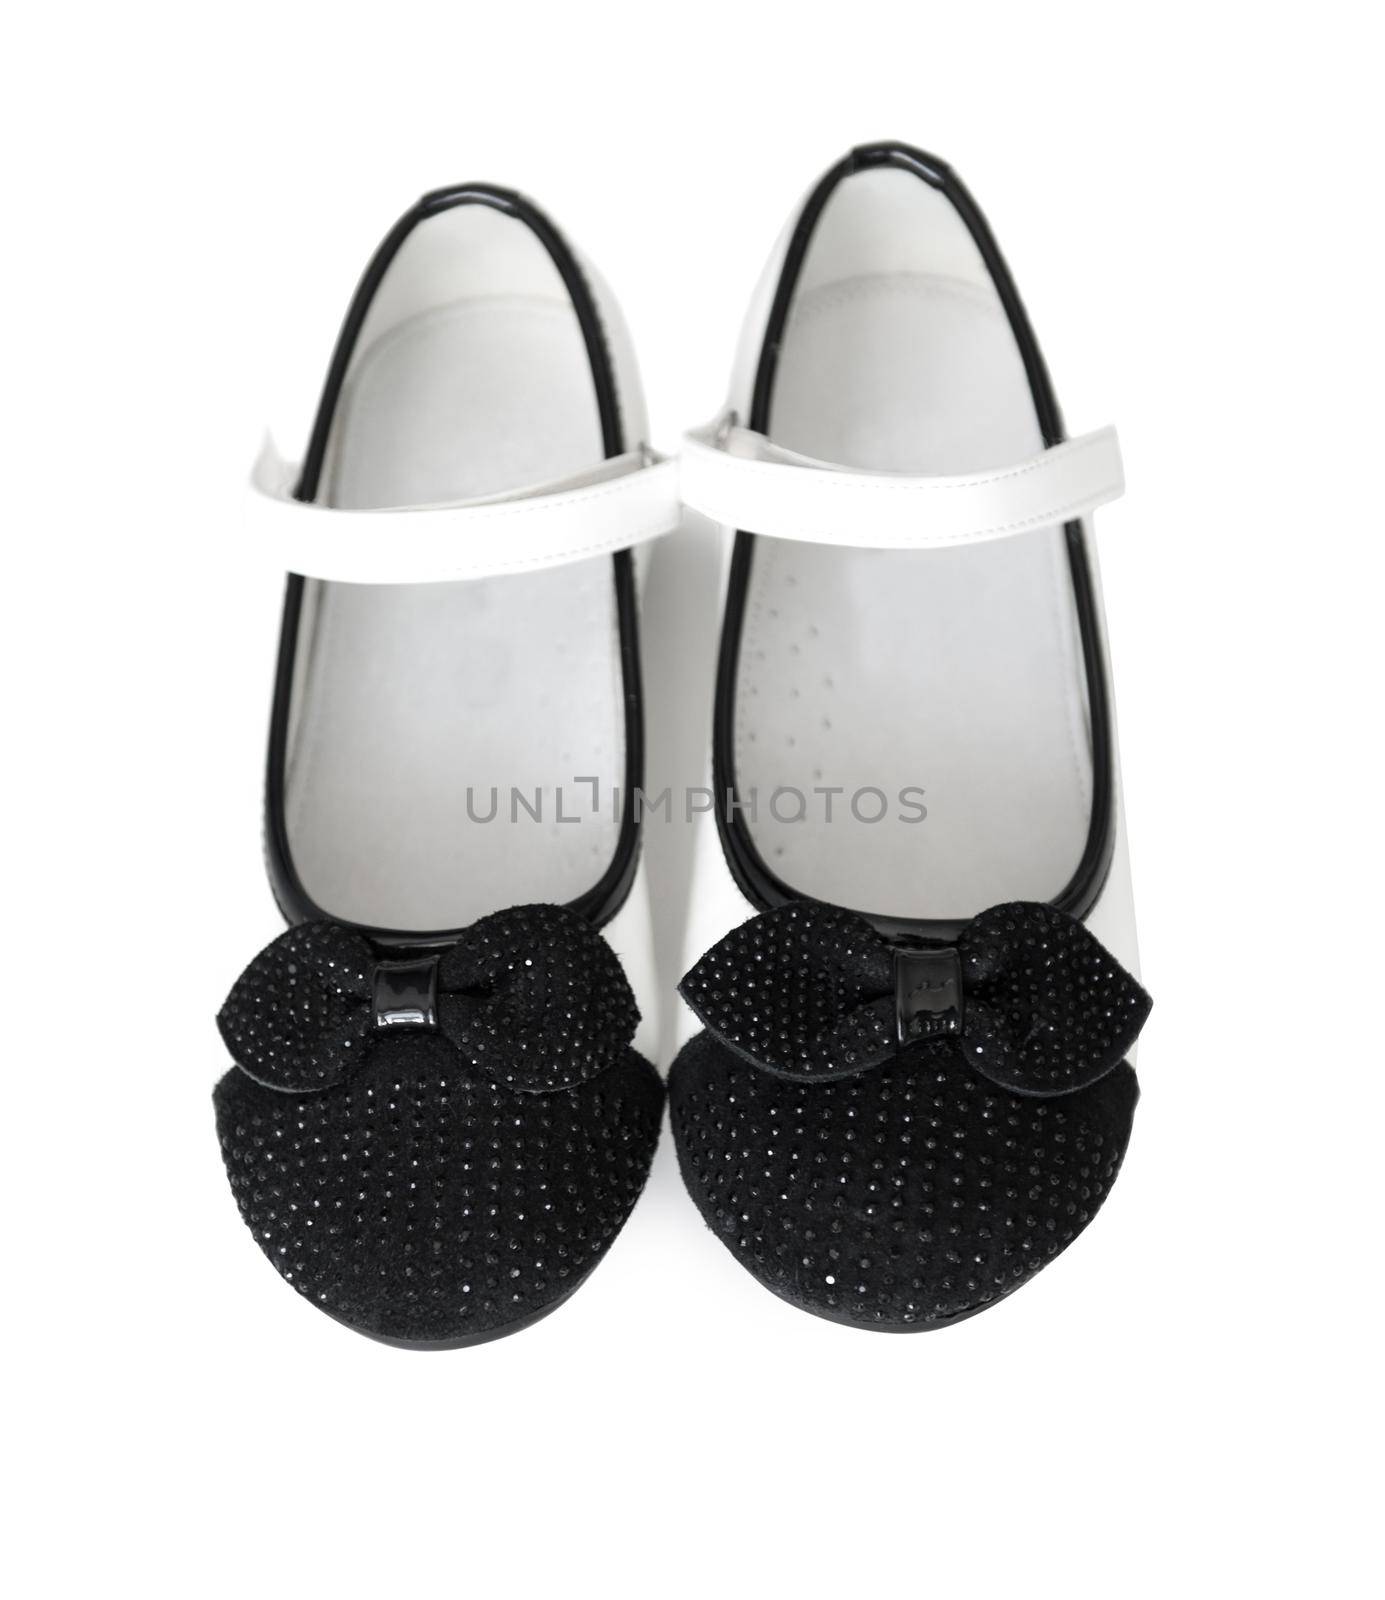 lovely black and white shoes for little girl by tan4ikk1